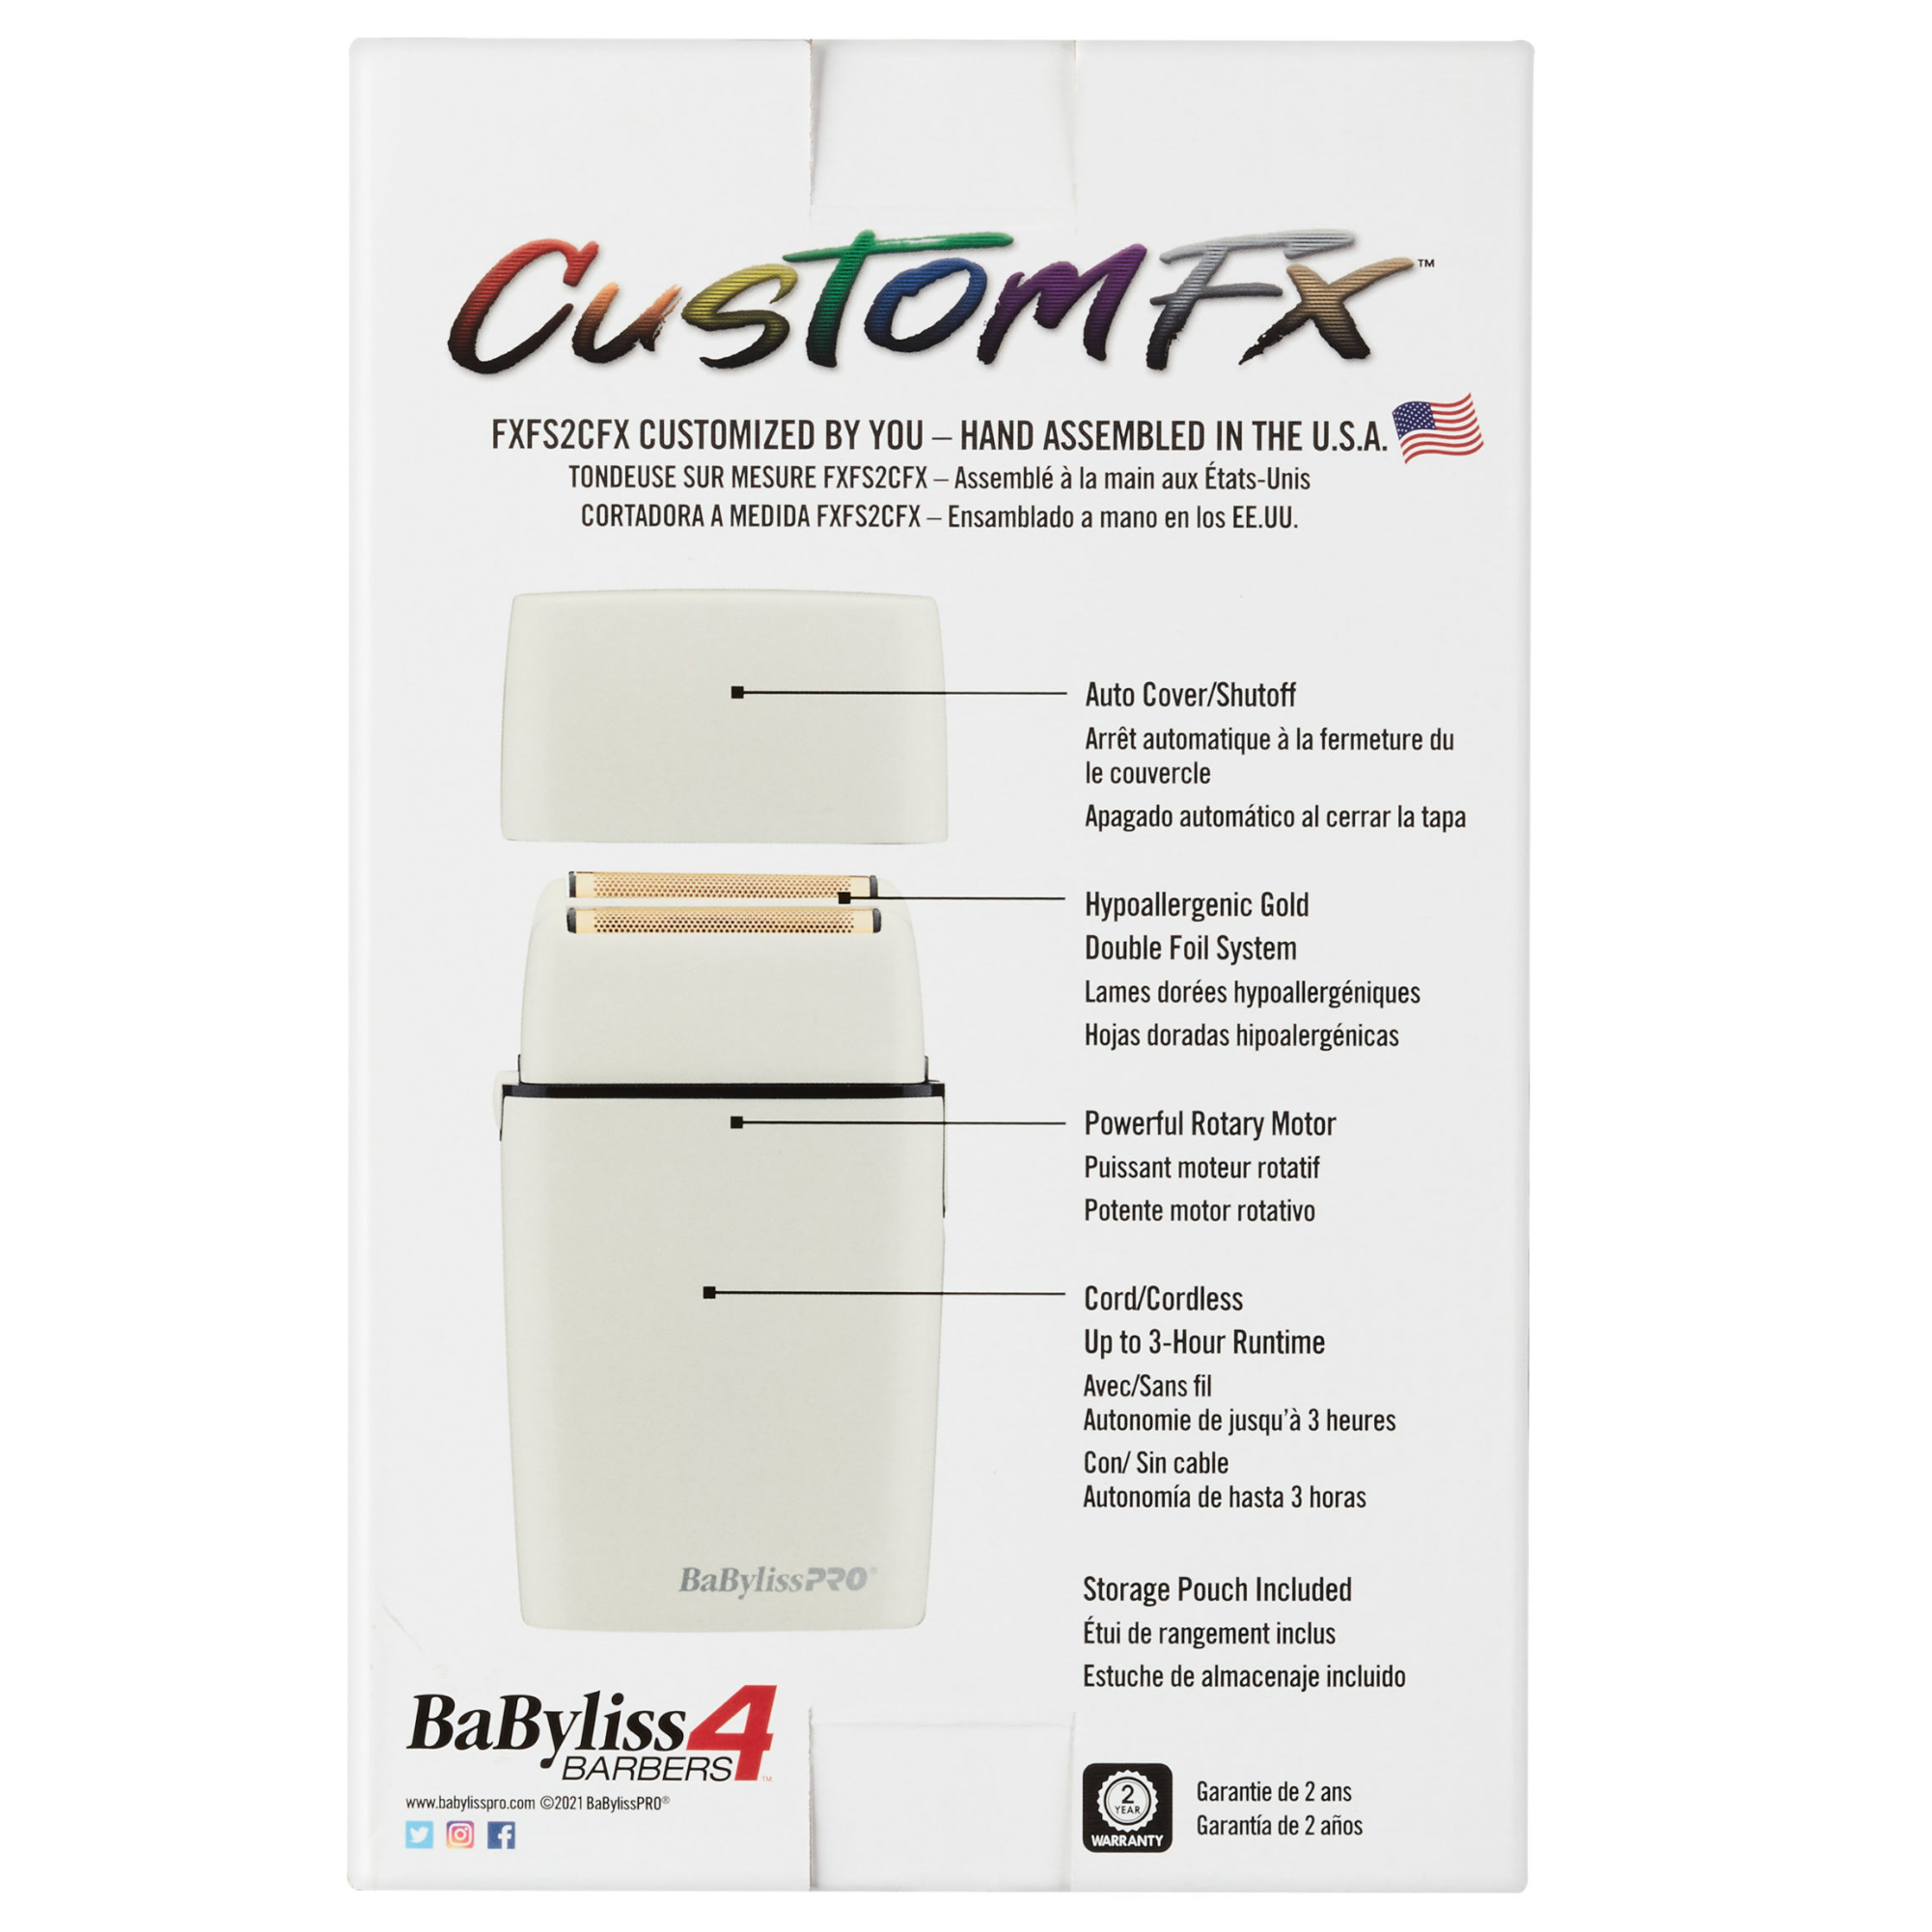 Hair Shaver Box Describing Customizable Components | BaBylissPRO CustomFX